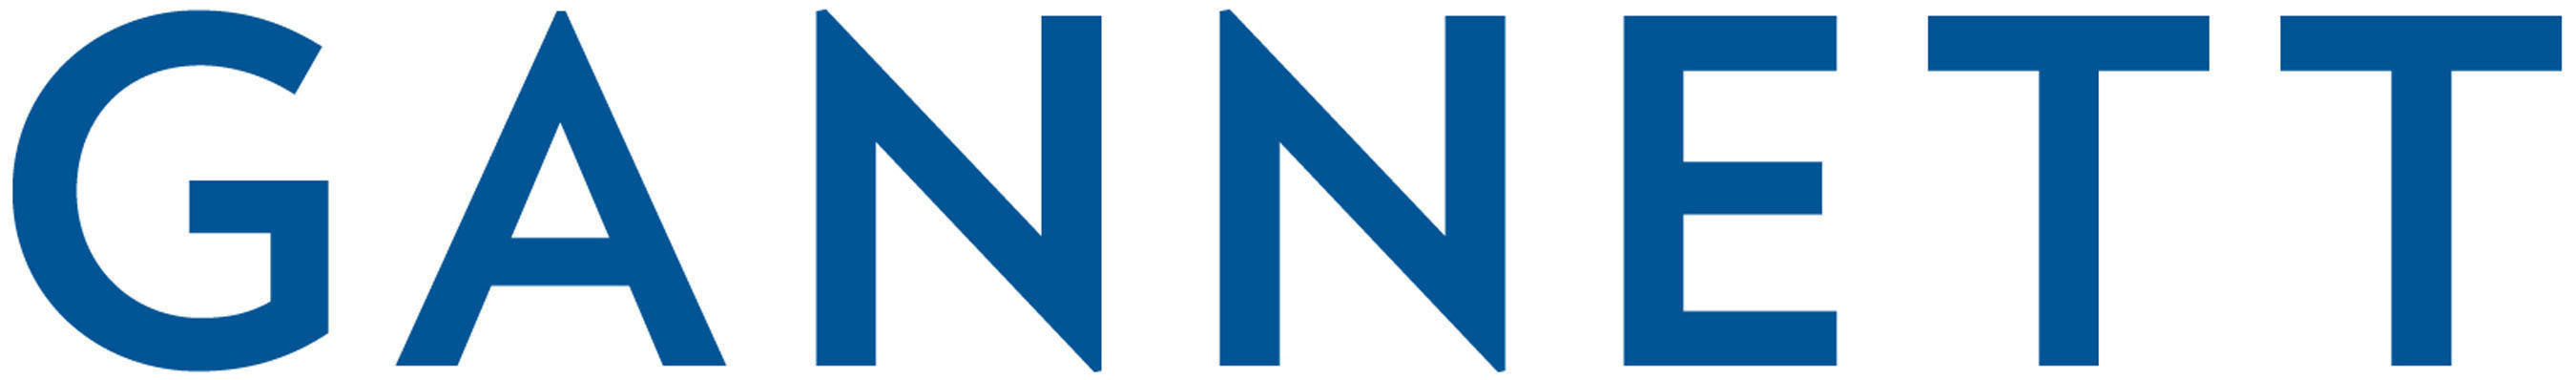 Gannett Logo. (PRNewsFoto/Gannett Co., Inc.) (PRNewsFoto/GANNETT CO., INC.)